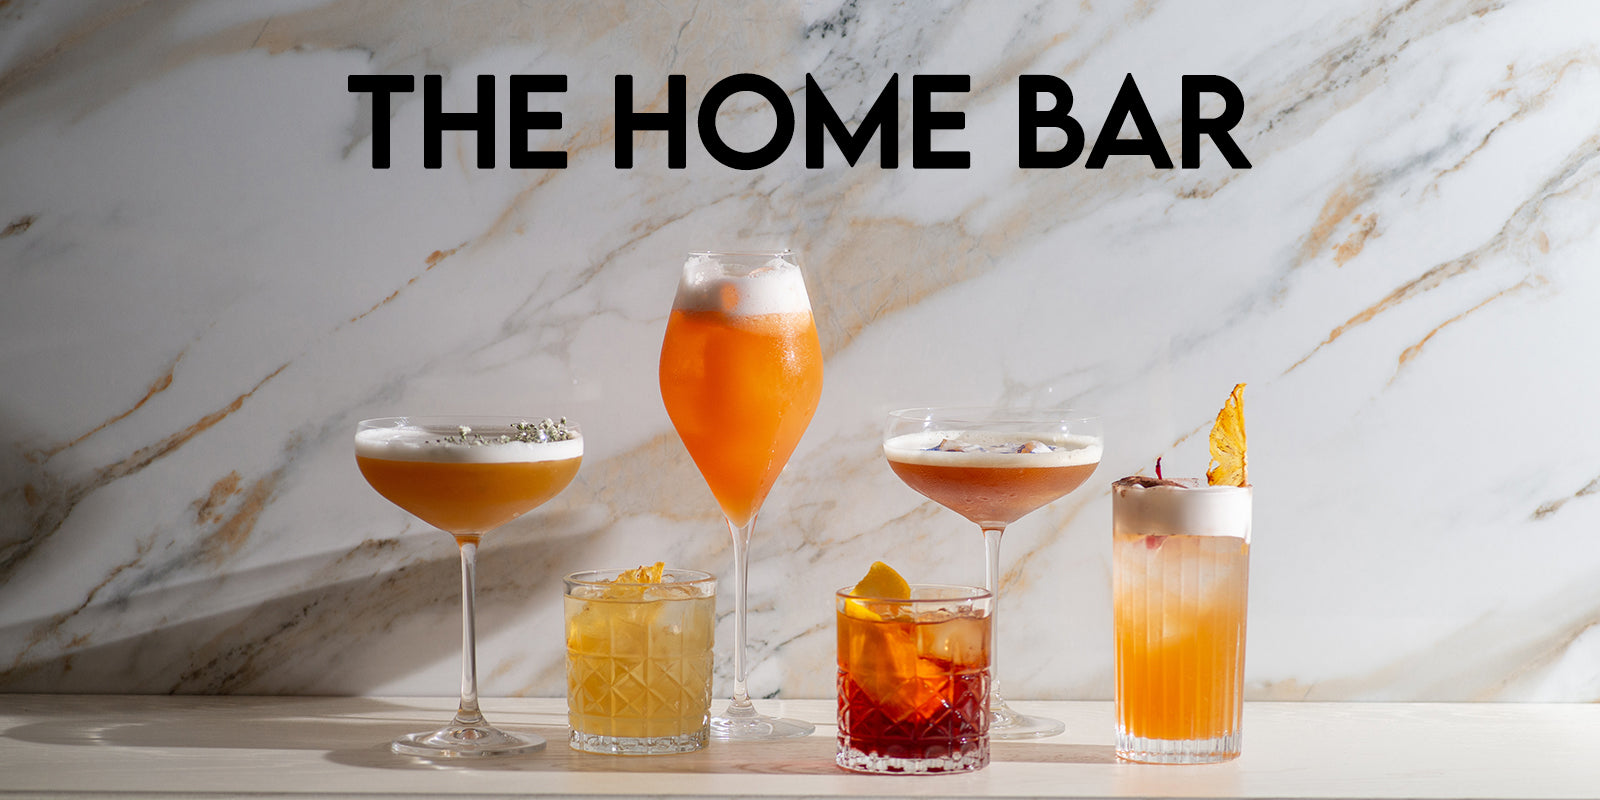 Home Bar: Get Creative with Cocktails & Mocktails! - MyToque